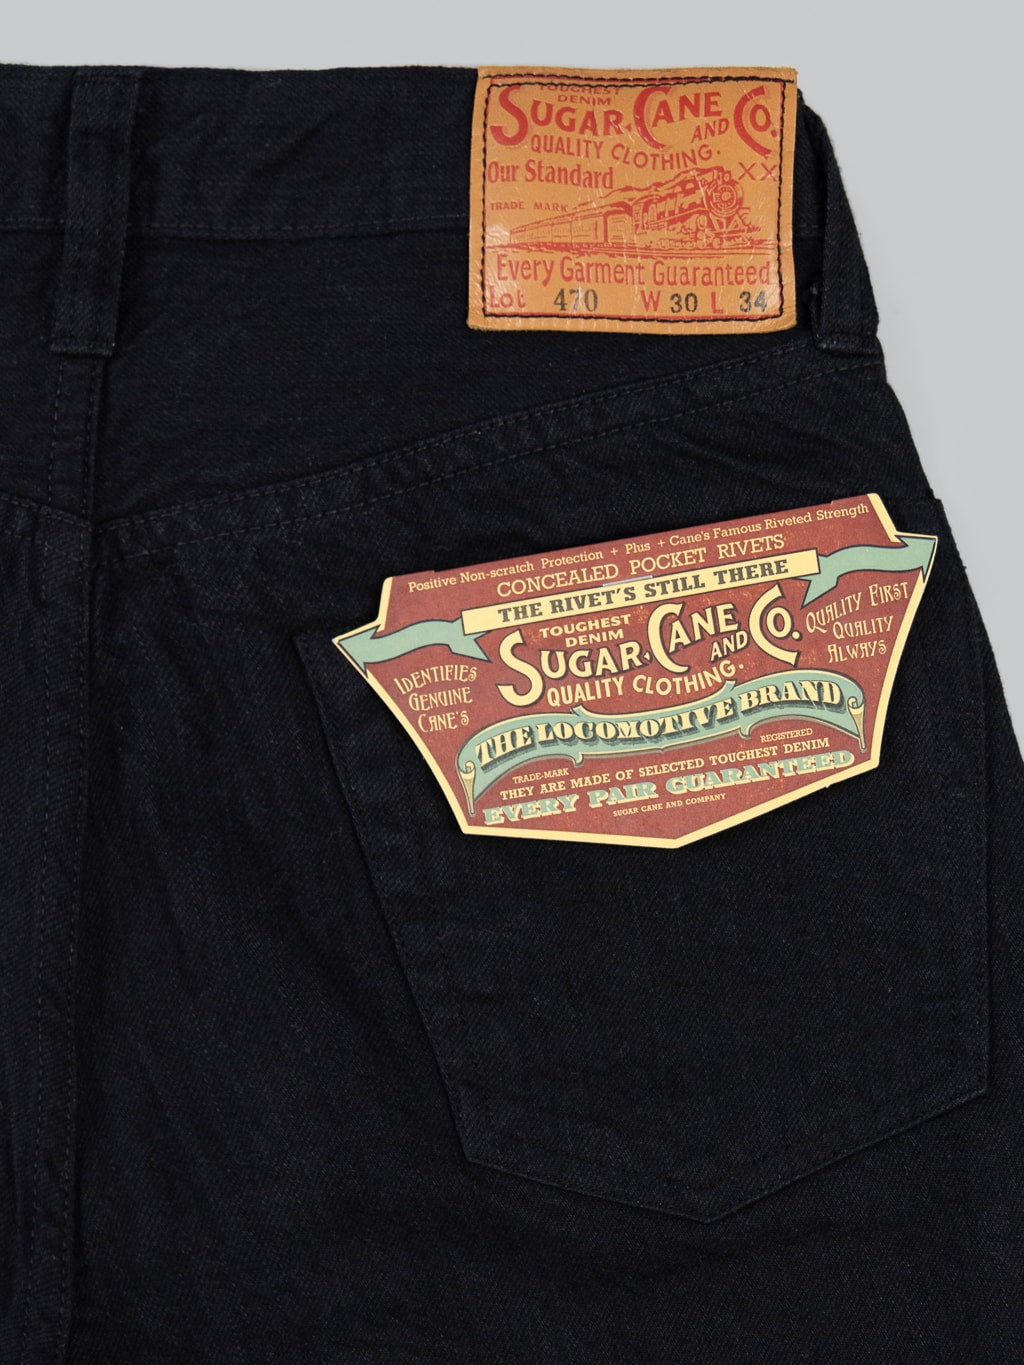 Sugar Cane Type III 13oz Black Denim Slim Jeans back pocket